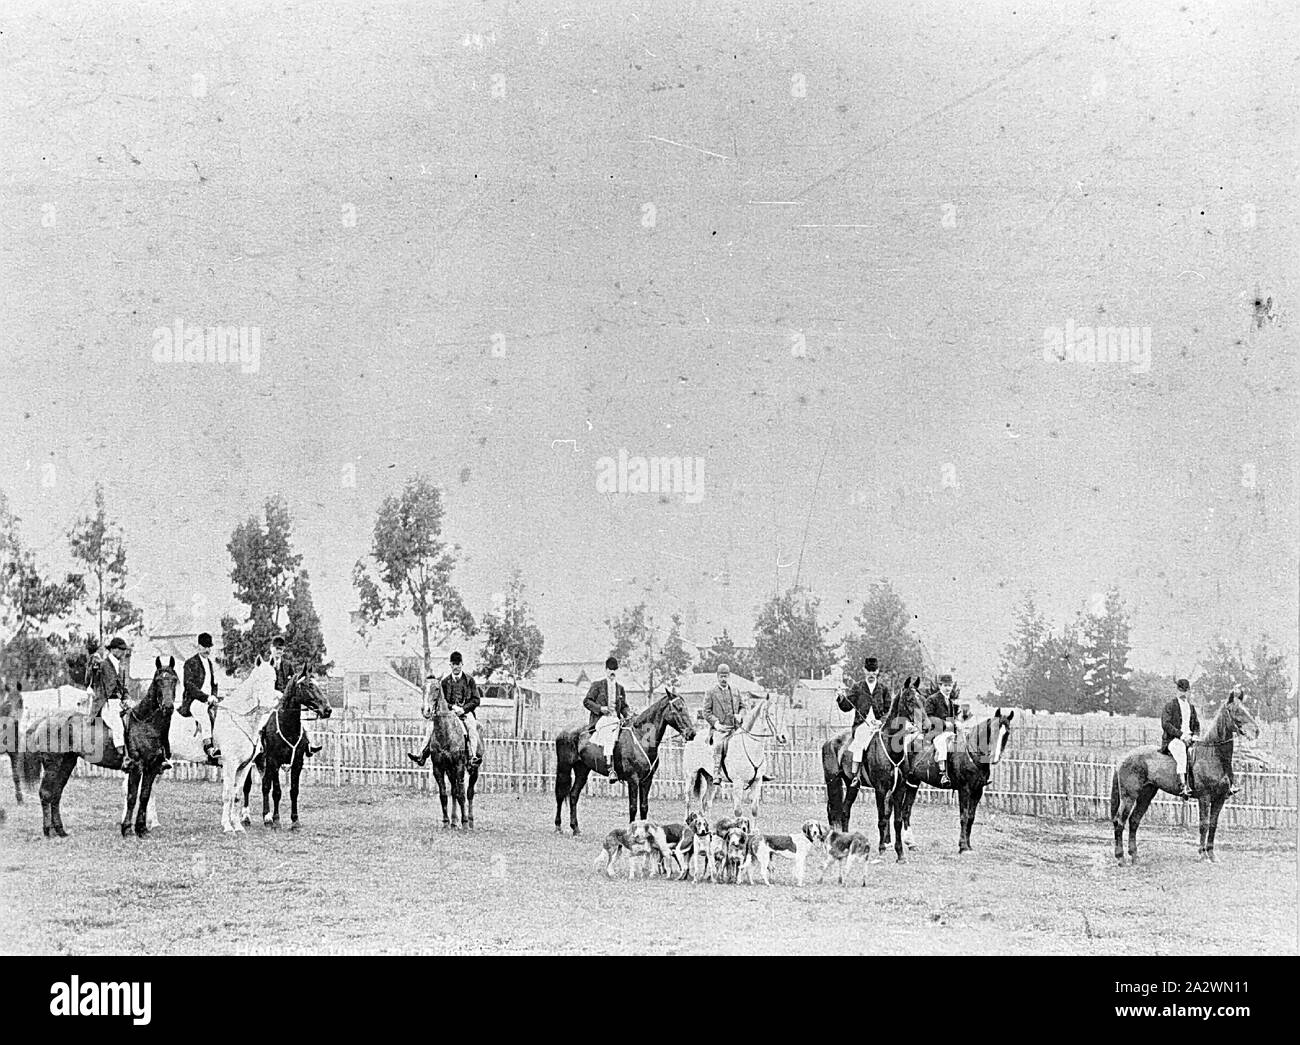 Negative - Members of the Hamilton Hunt Club With Hounds & Horses, Hamilton, Victoria, 1893, Members of the Hamilton Hunt Club with hounds and horses Stock Photo